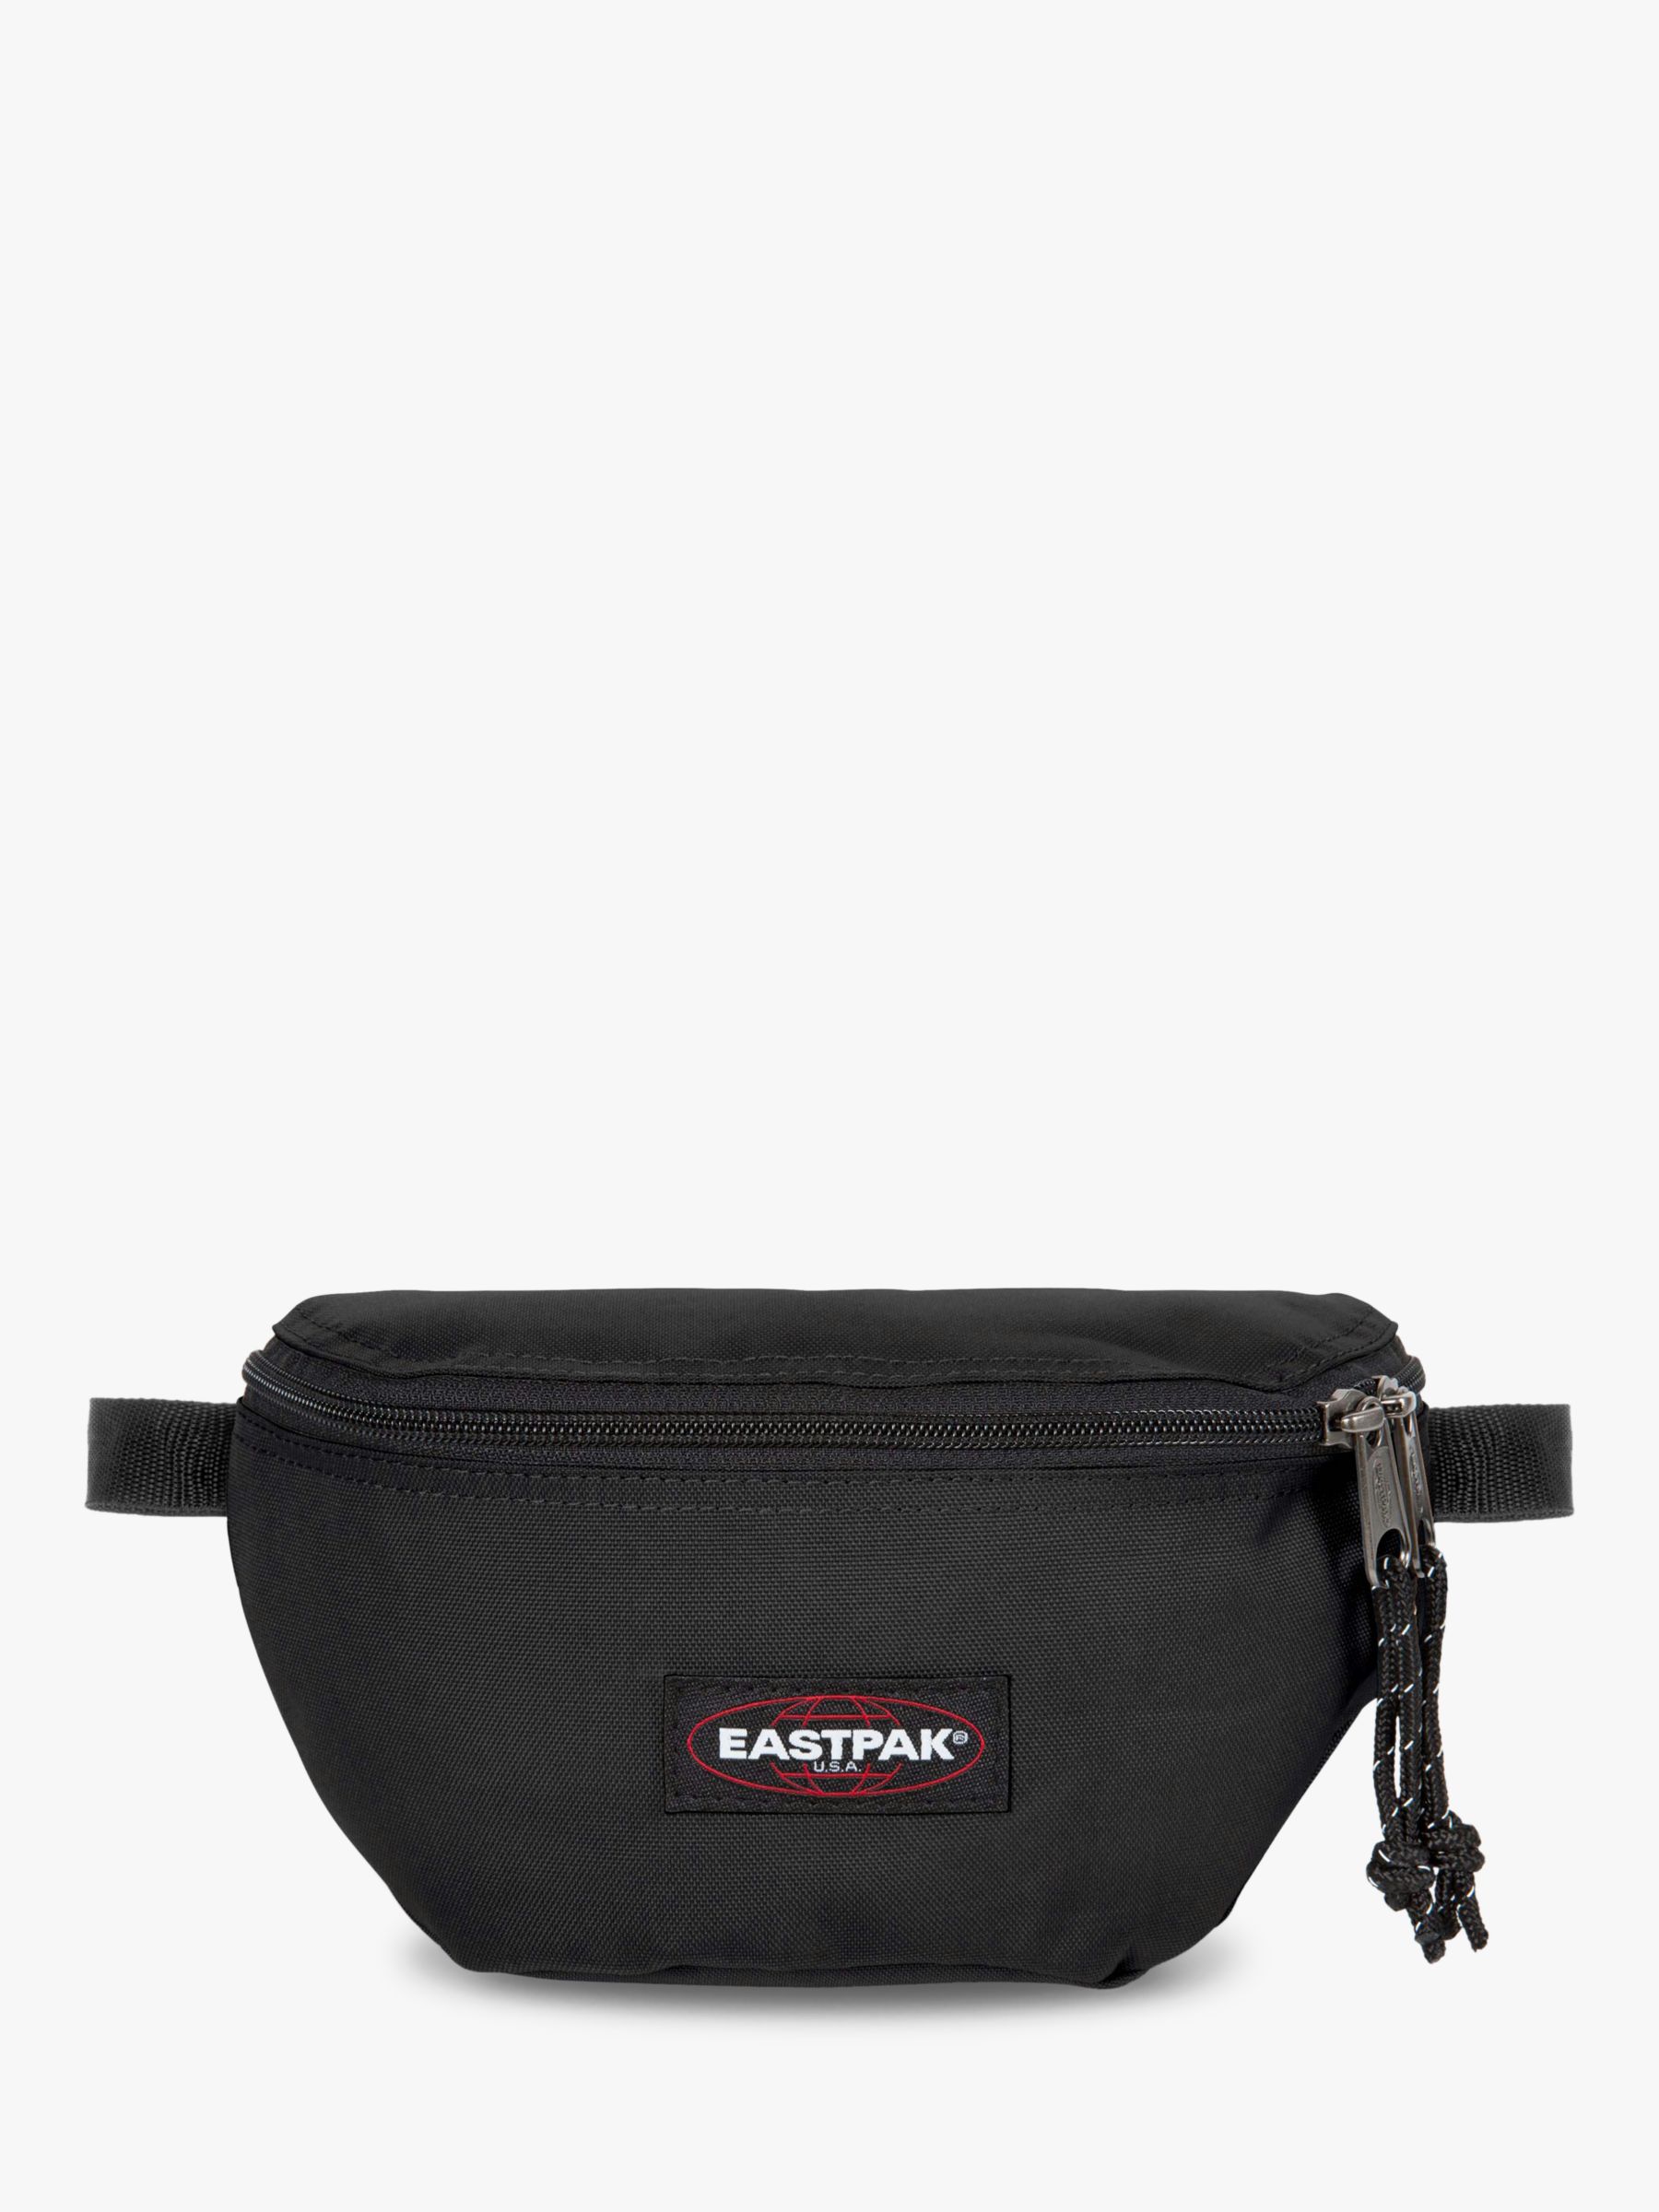 Поясная сумка Springer Eastpak, черный сумка на пояс eastpak springer kontrast bounci